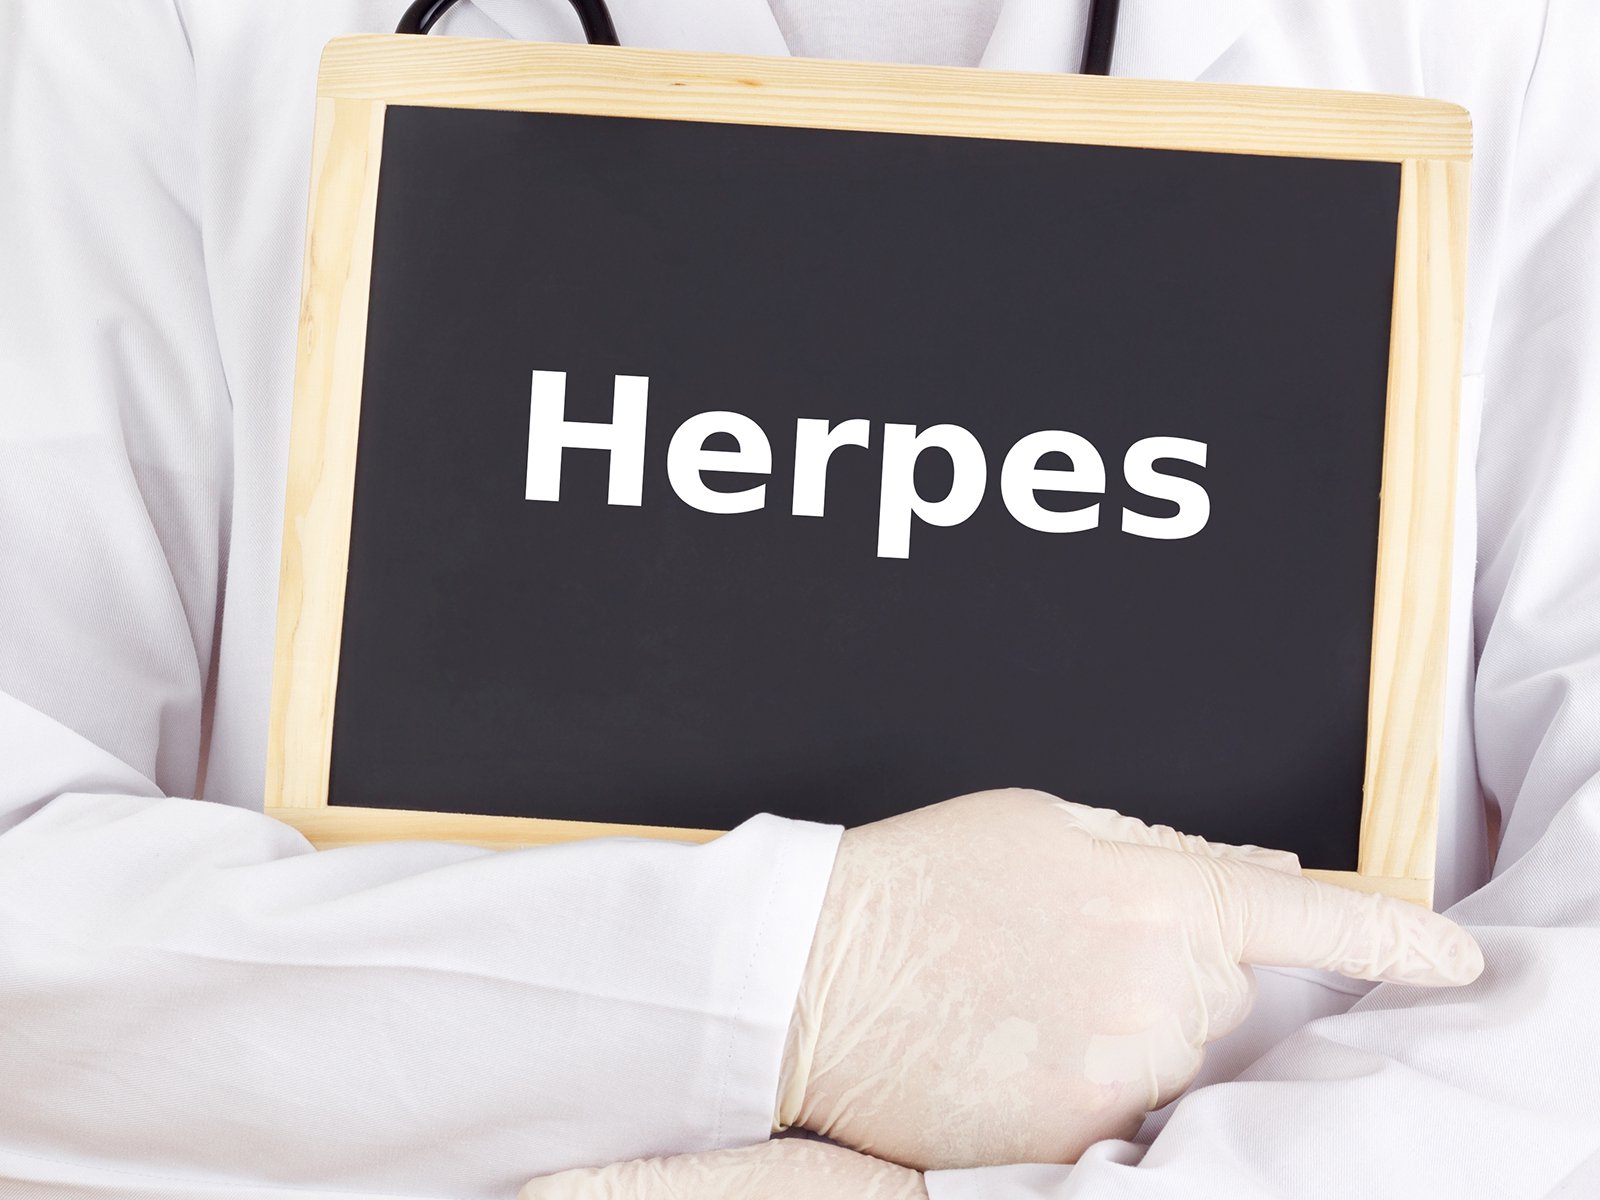 Genitaler herpes